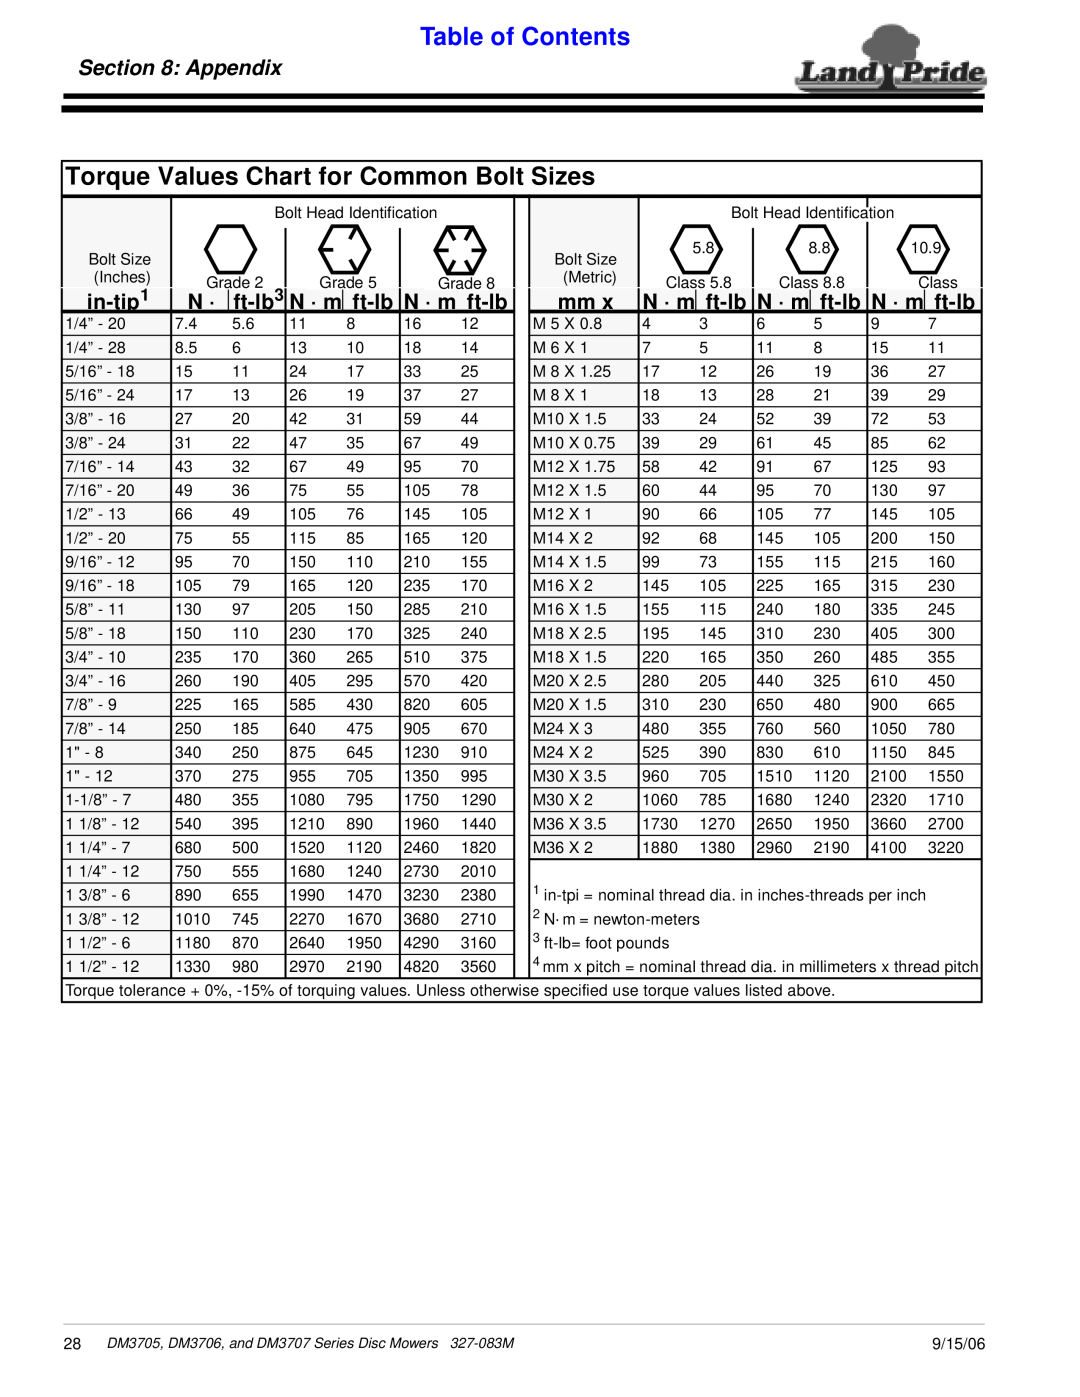 Land Pride DM3705 Series, DM3706 Series Torque Values Chart for Common Bolt Sizes, Appendix, Table of Contents, 9/15/06 